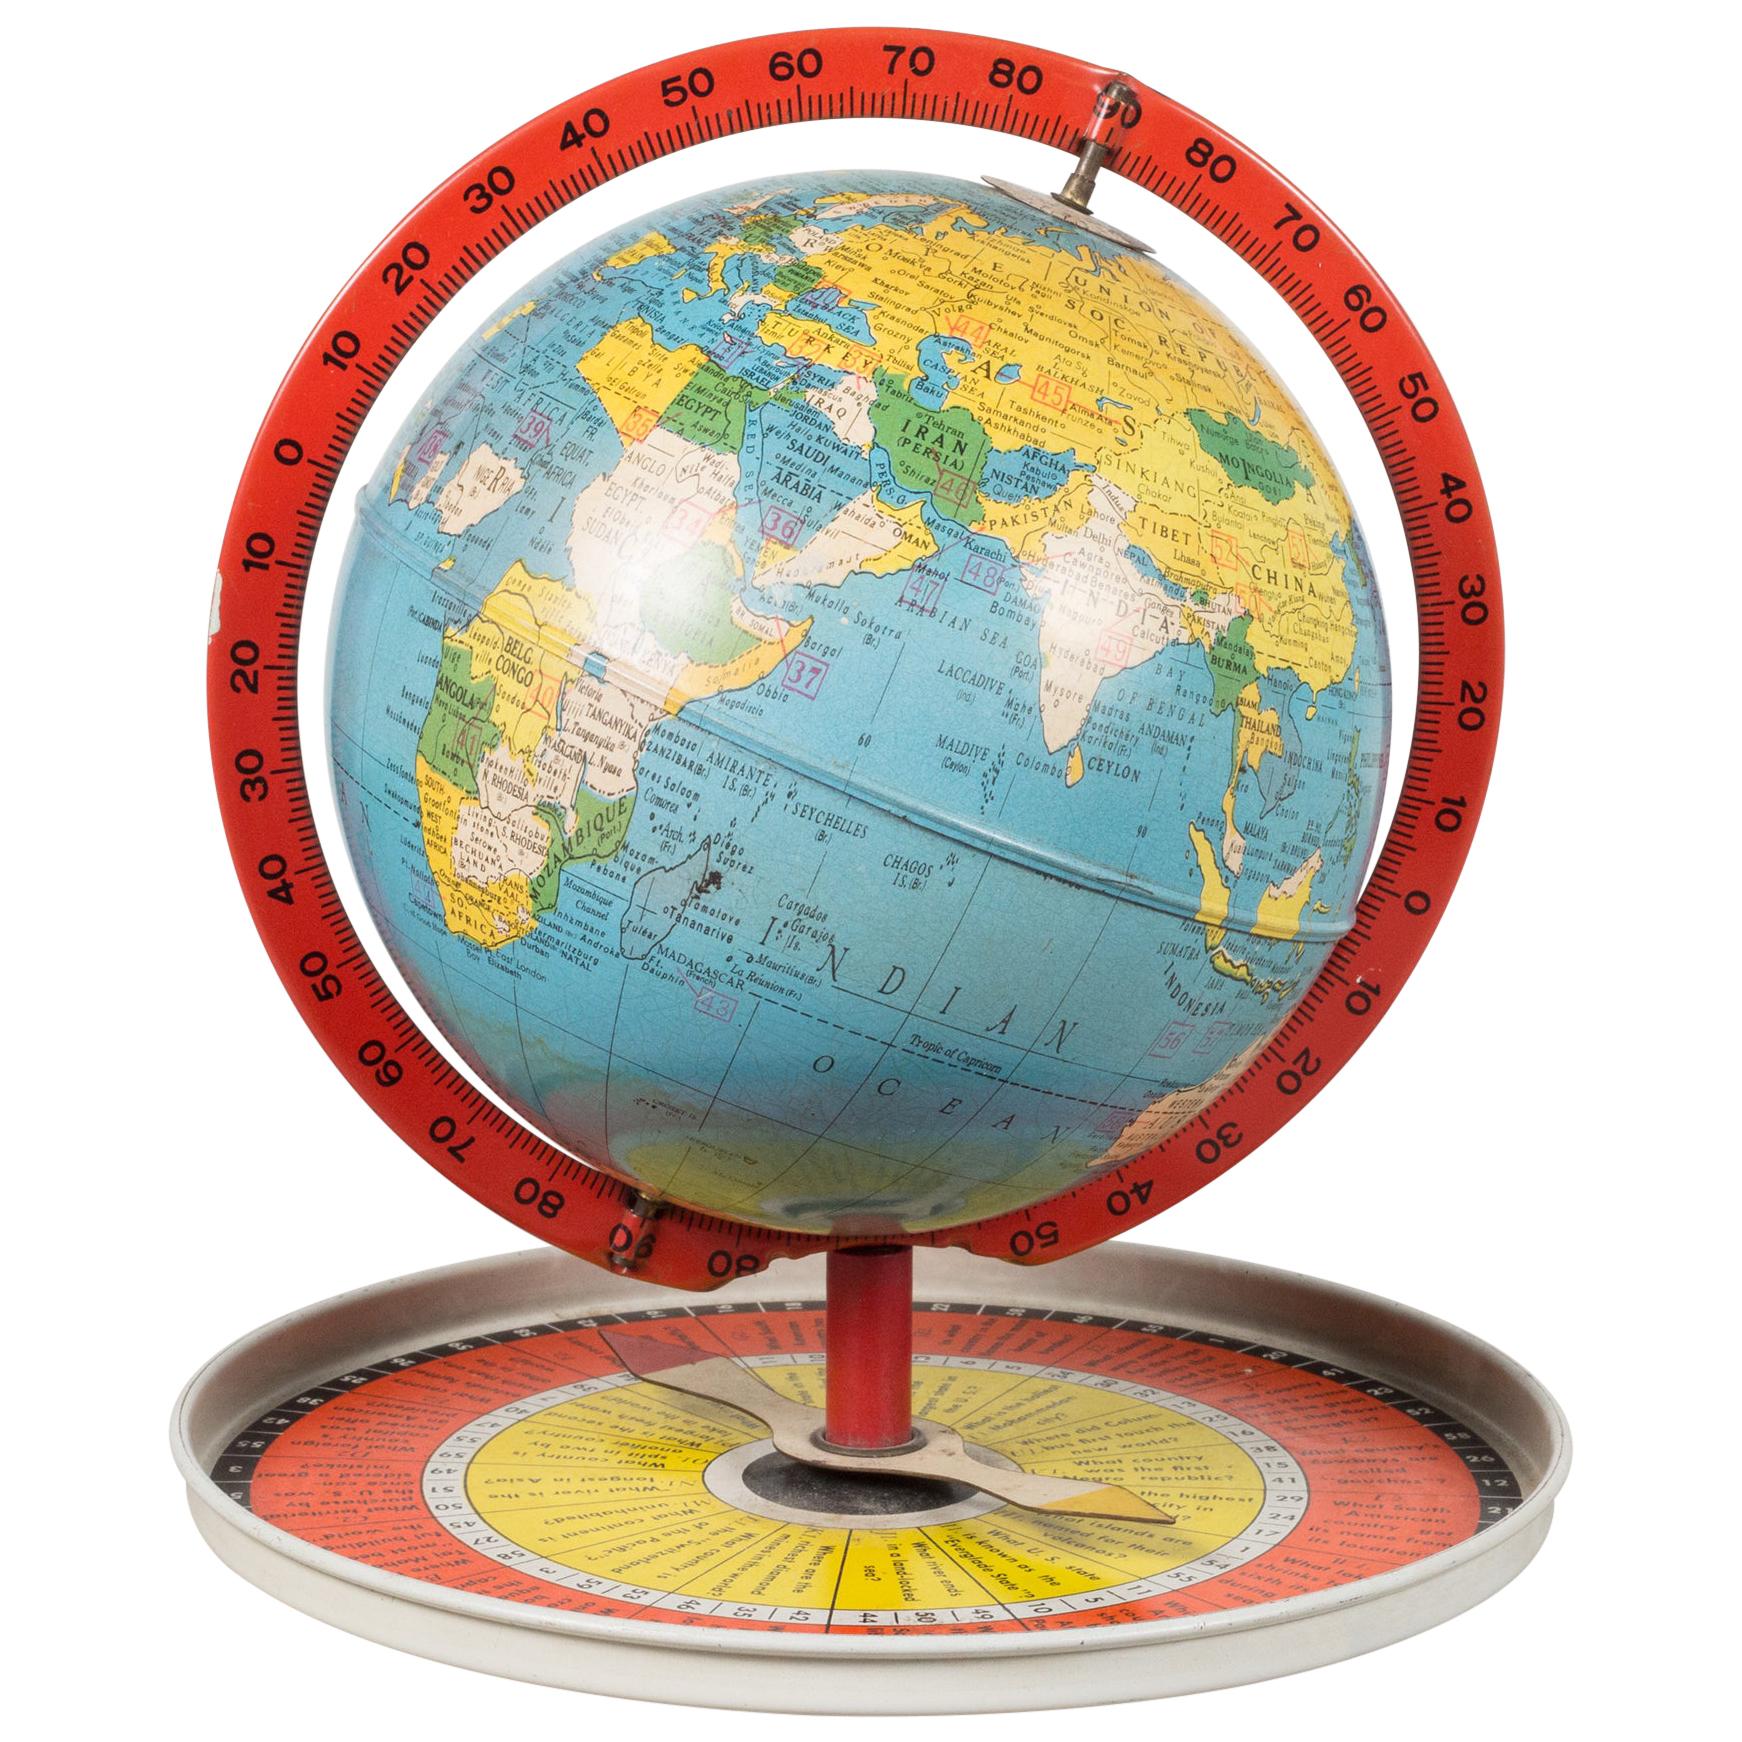 Antique Metal Replogle Travel Game Globe c.1950